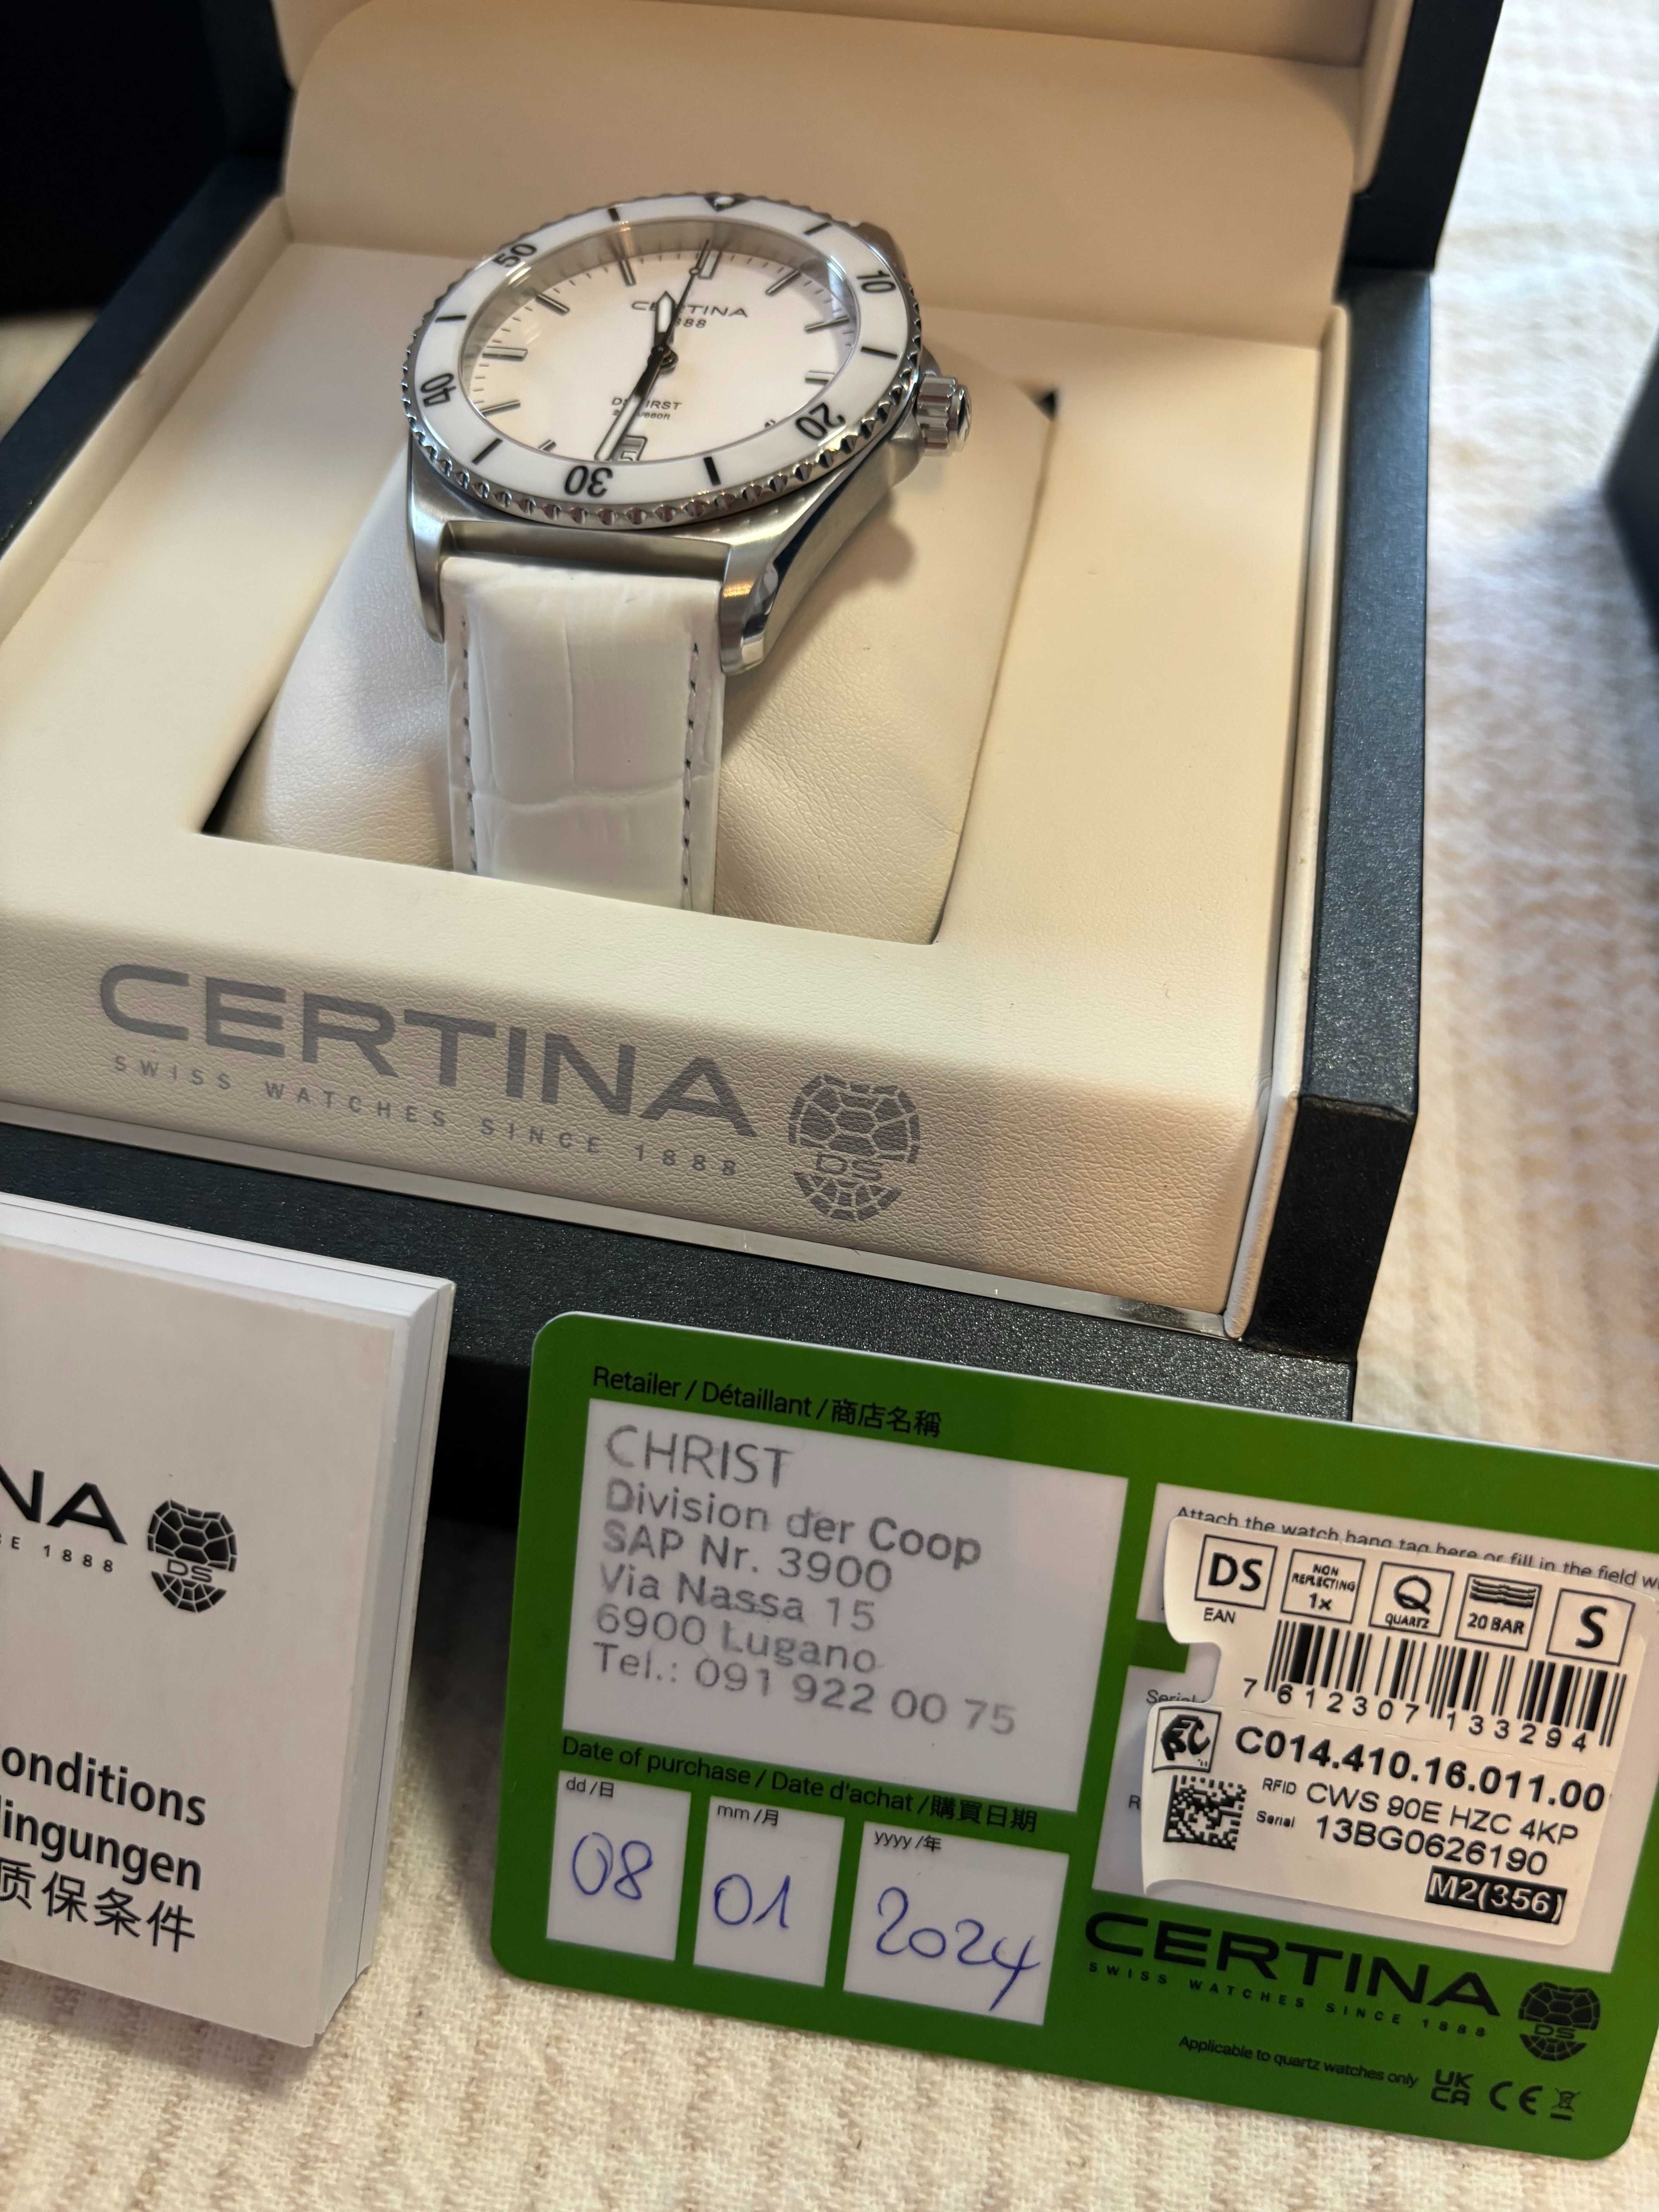 nowa CERTINA biały zegarek męski damski unisex 41mm szafir i ceramika